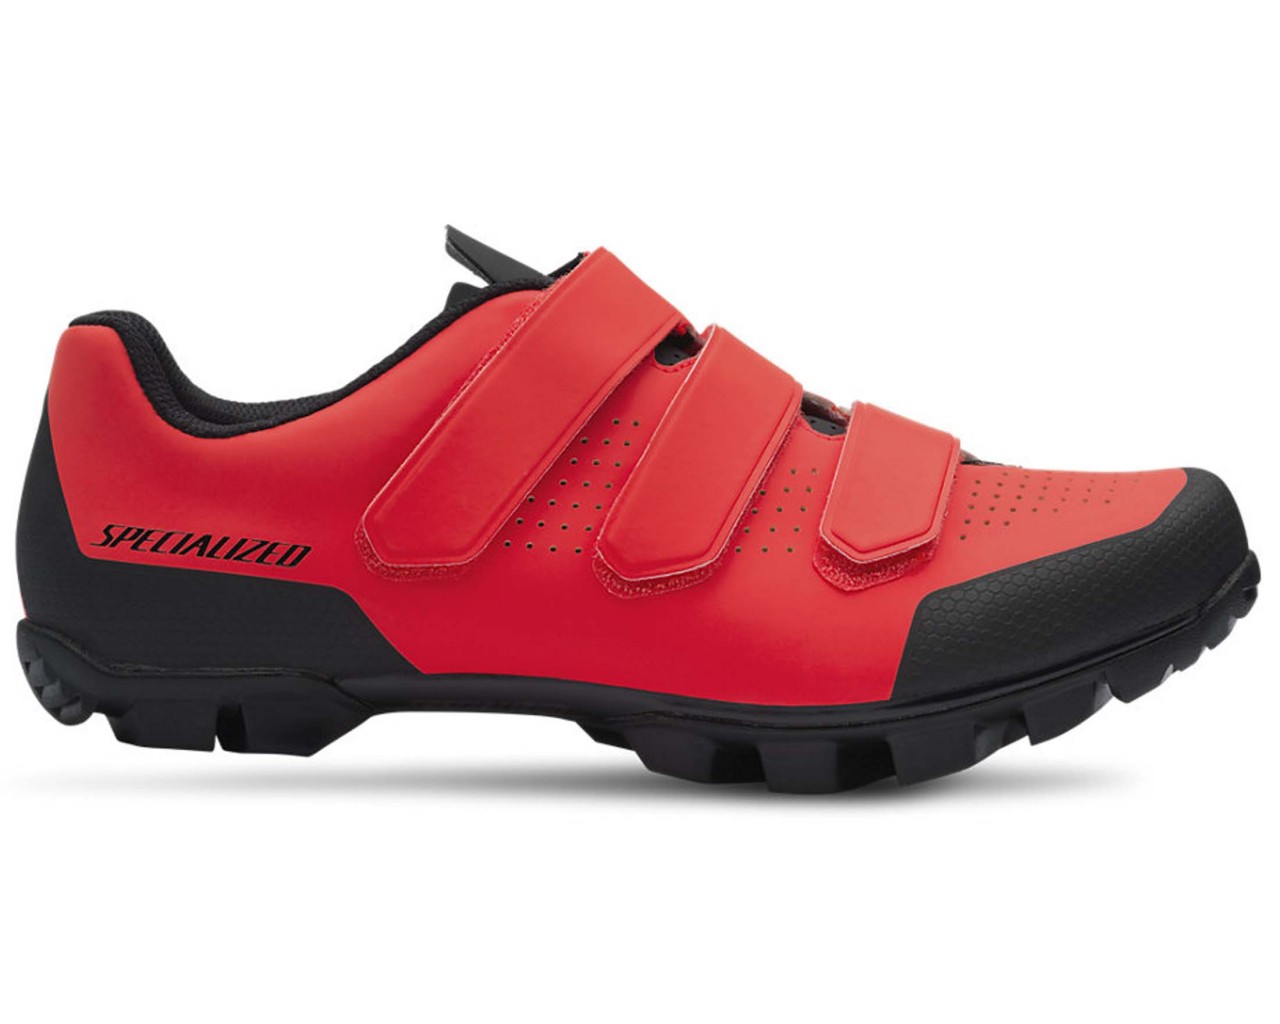 Specialized Sport MTB-Schuhe | rocket red